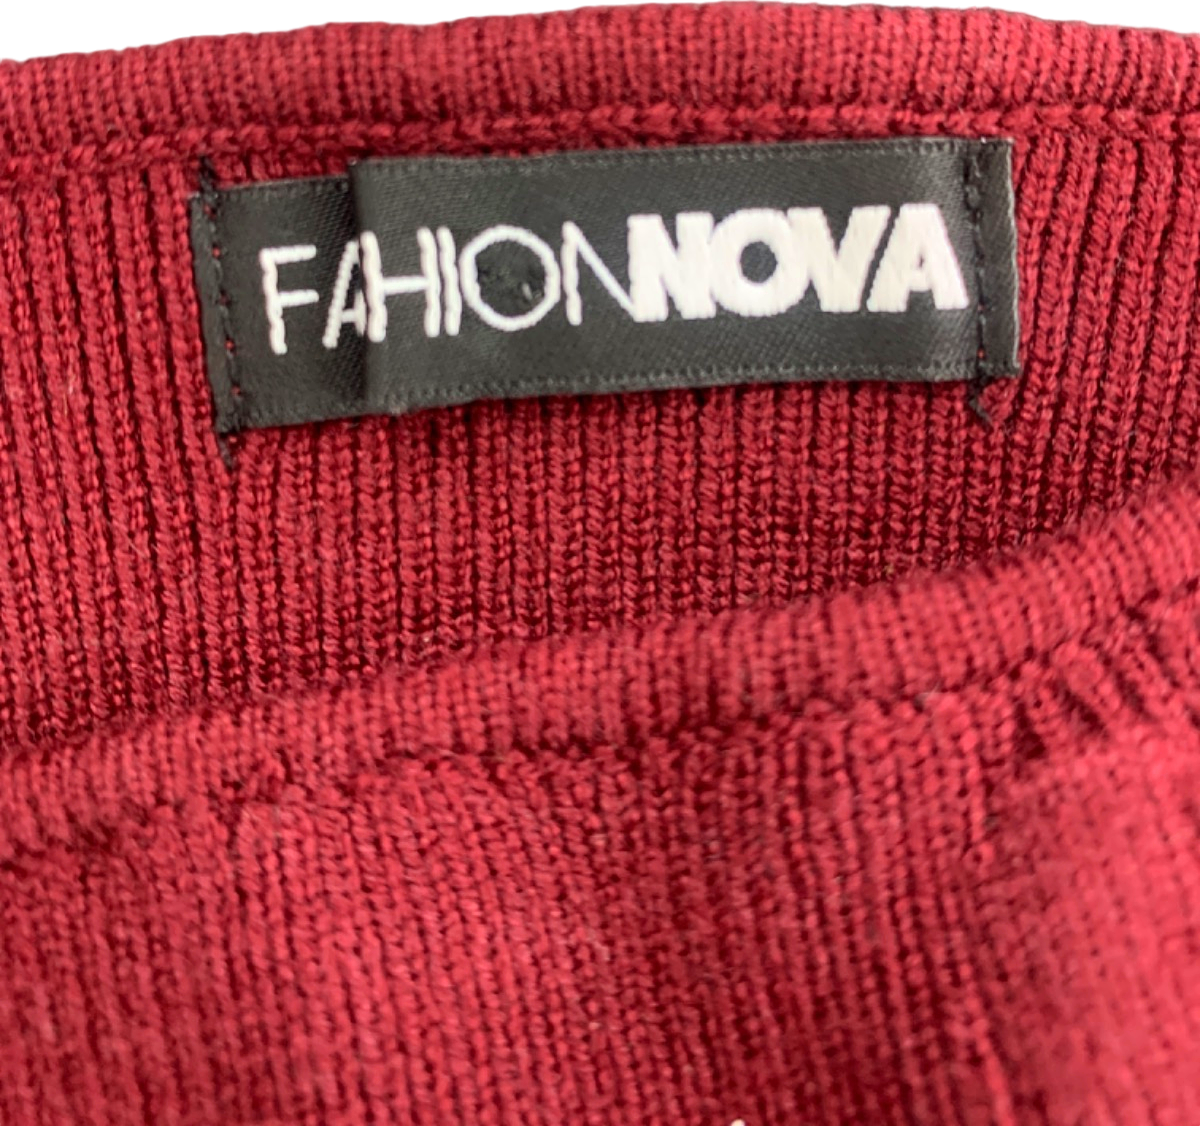 Fashion Nova Red Ribbed Crop Top XS